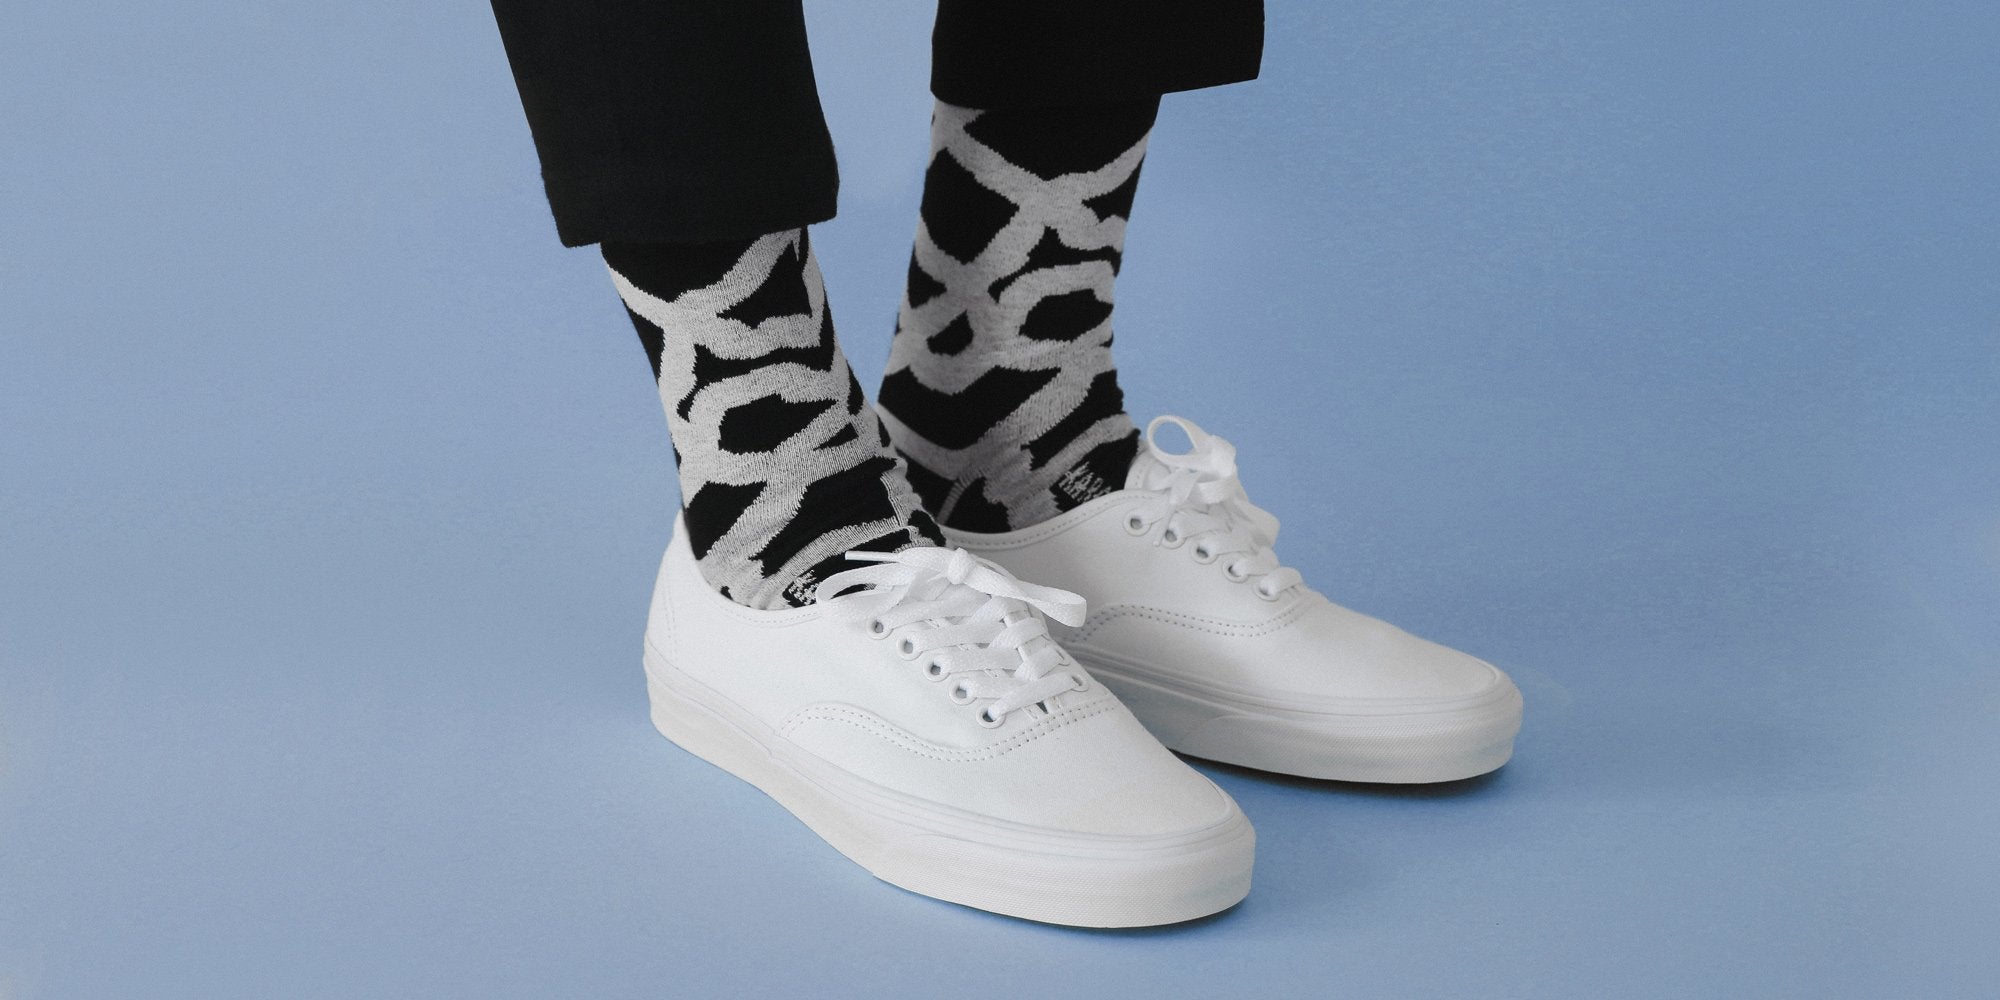 Look Mate London  Cool Socks Designed for Men and Women